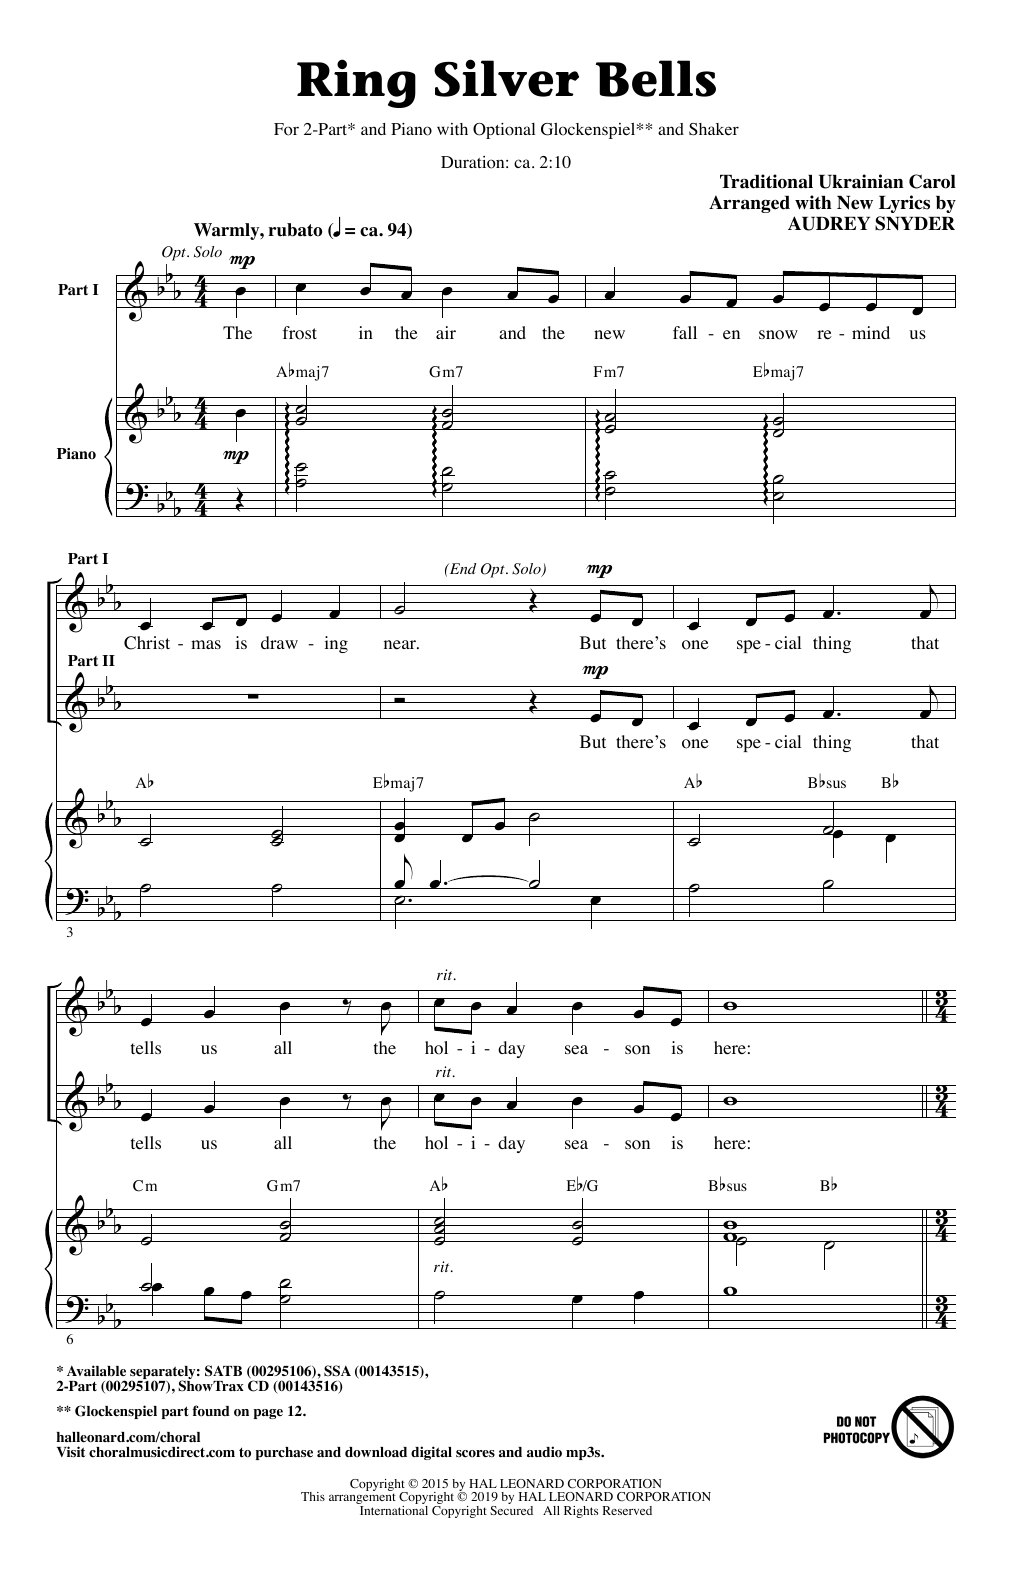 Traditional Ukrainian Carol Ring Silver Bells (arr. Audrey Snyder) Sheet Music Notes & Chords for 2-Part Choir - Download or Print PDF